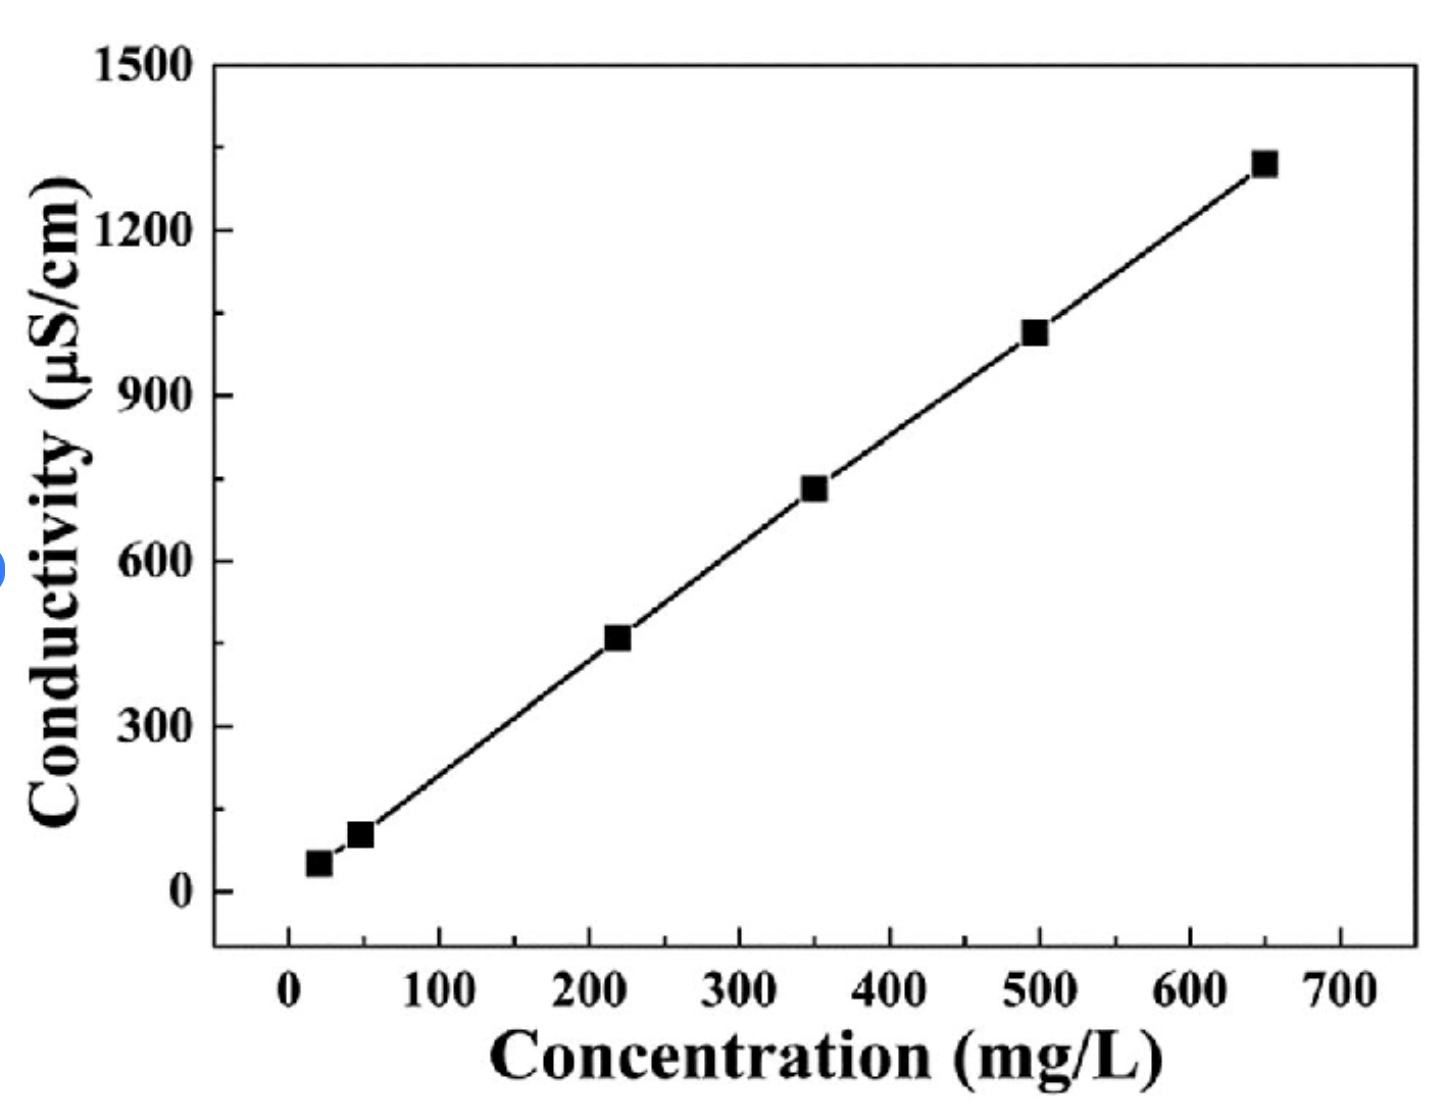 conductivity vs concentration graph